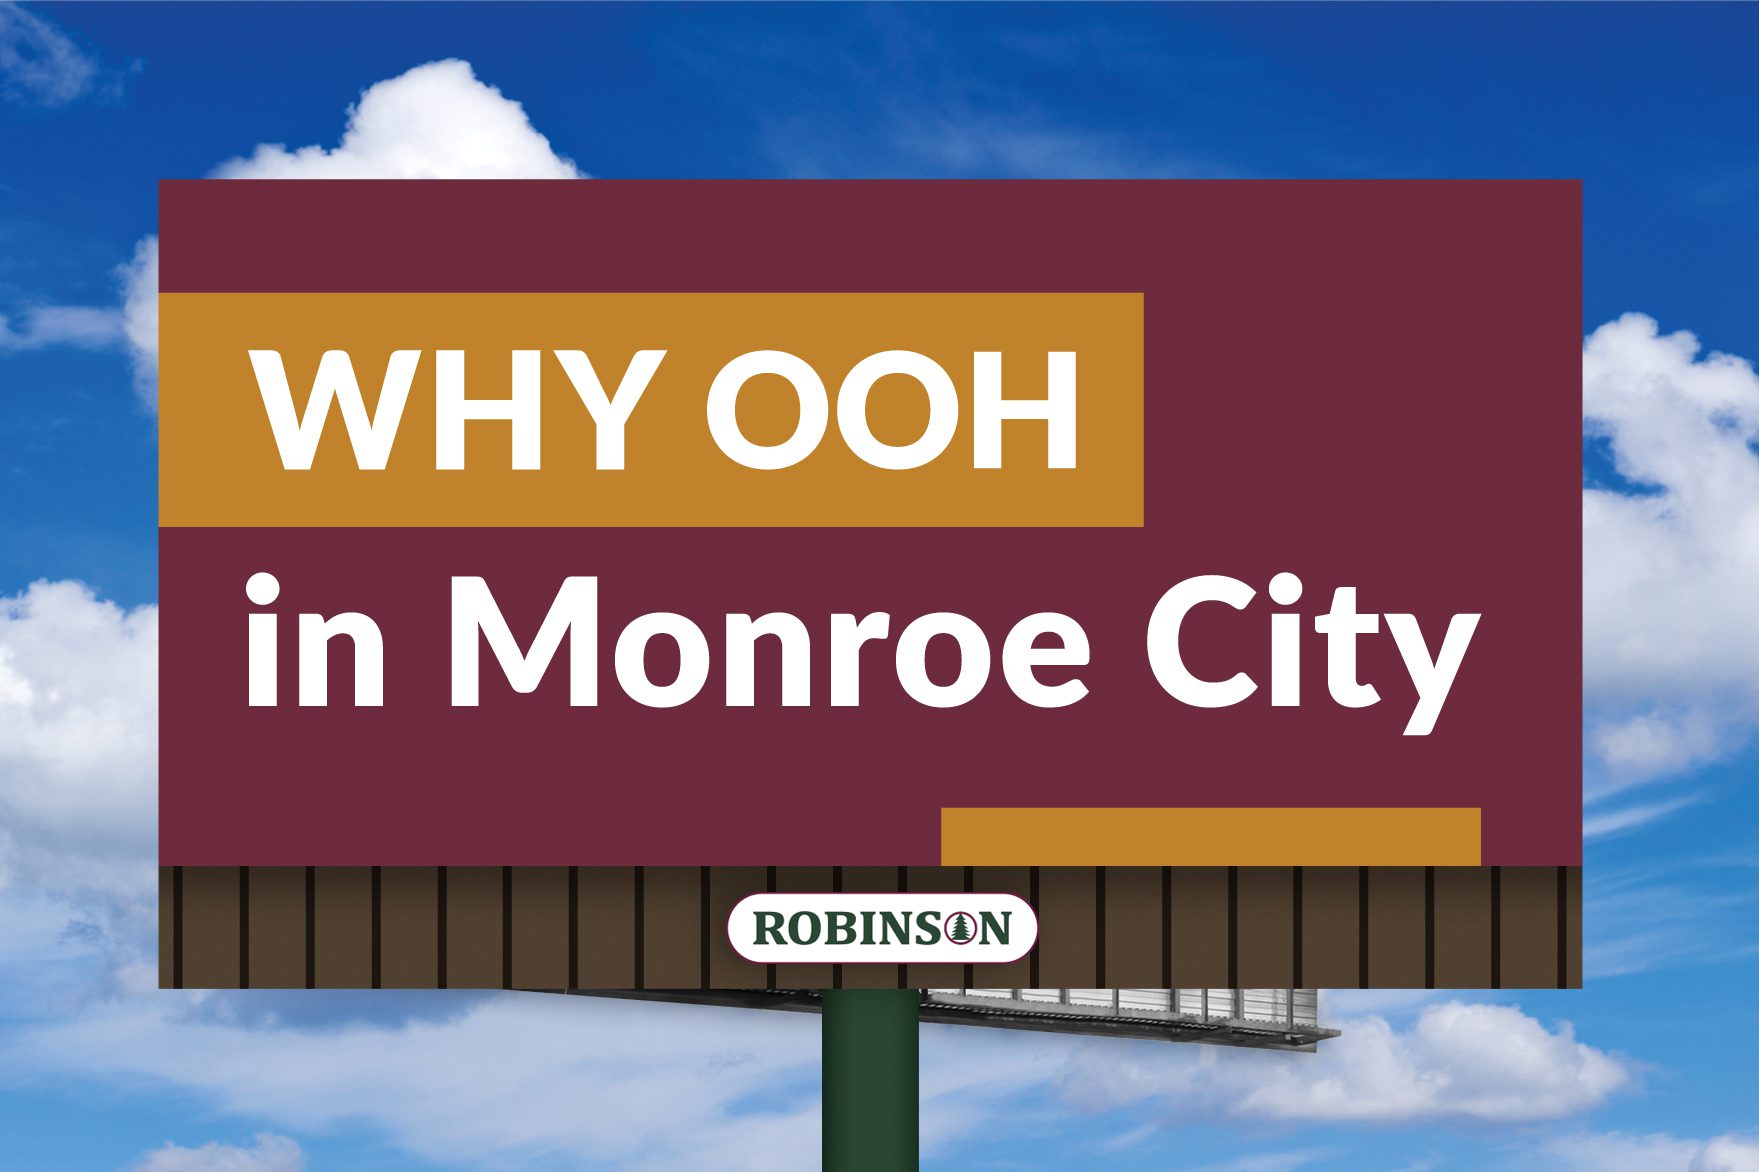 Monroe City, Missouri digital billboard advertising